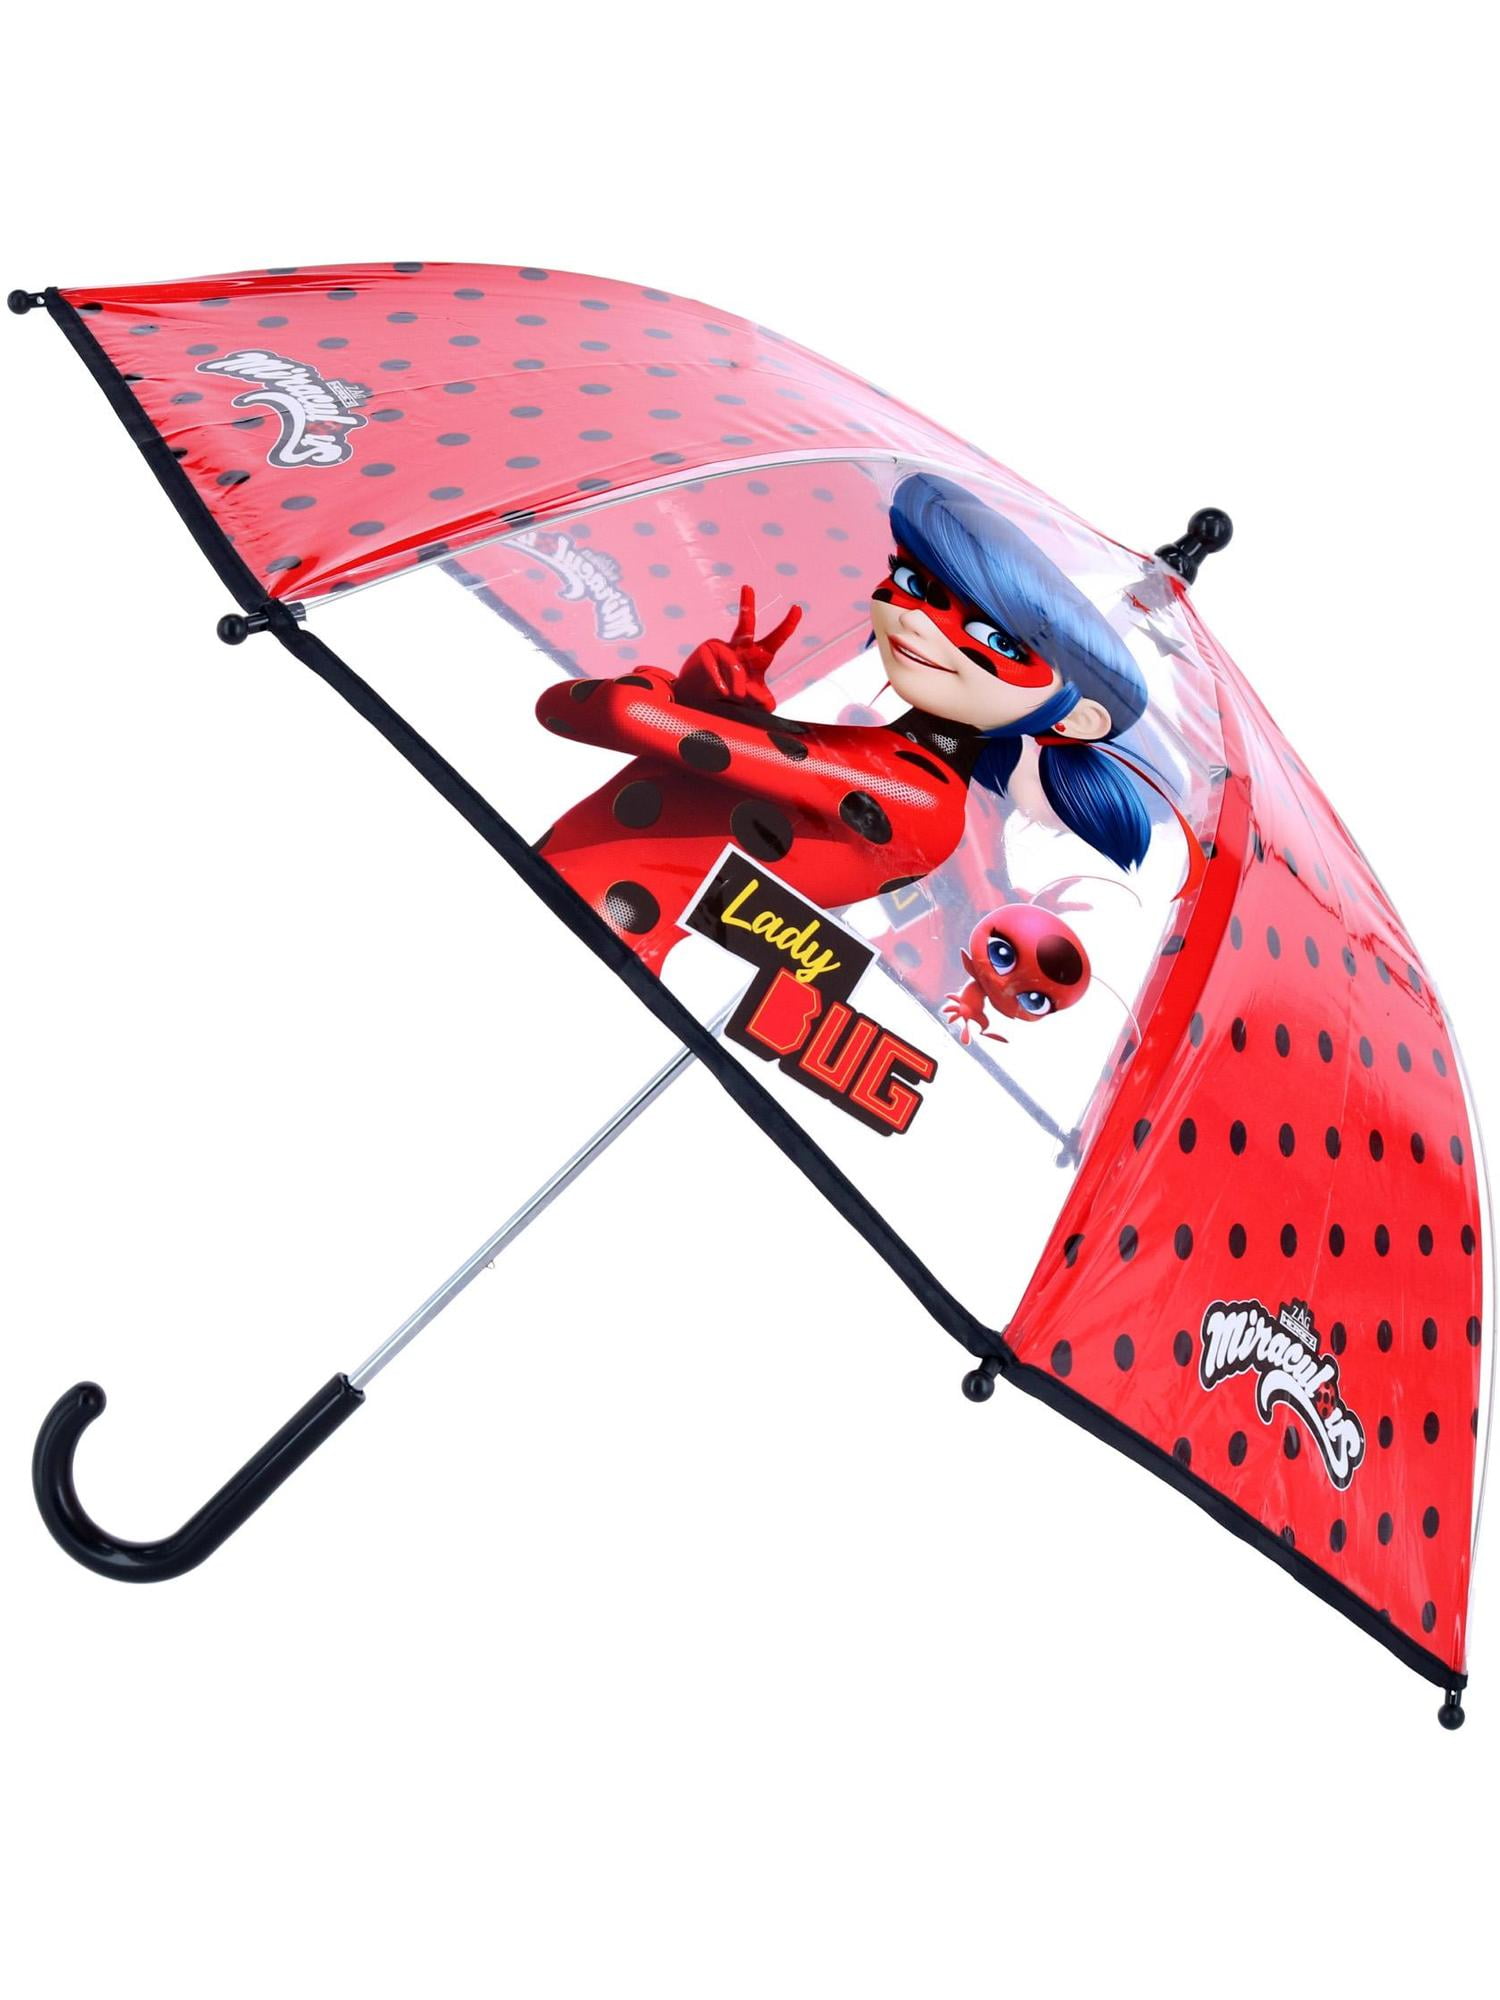 BEETTY Umbrella Ladybug Print Compact Folding Travel Lightweight Portable Windproof Sun Rain Umbrellas 